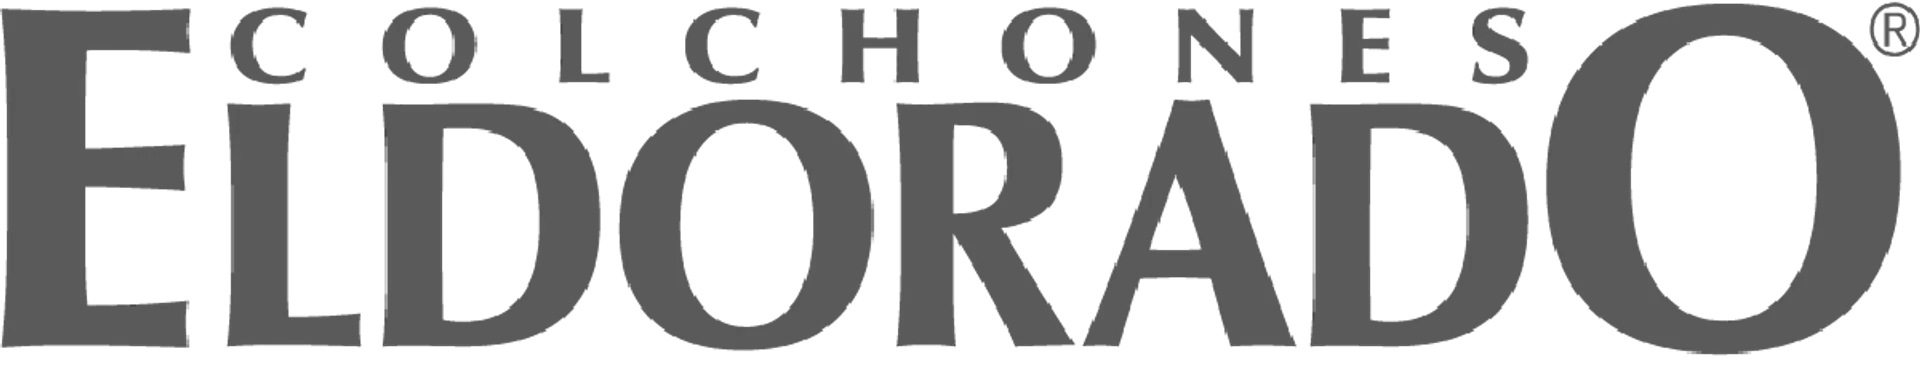 COLCHONES EL DORADO logo de catálogo